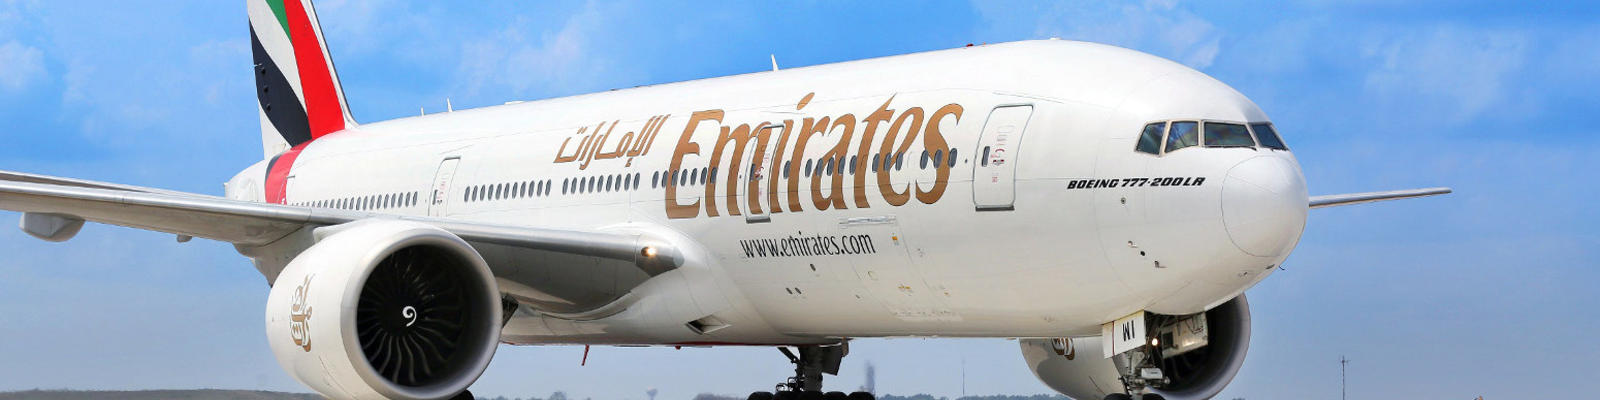 An Emirates plane.